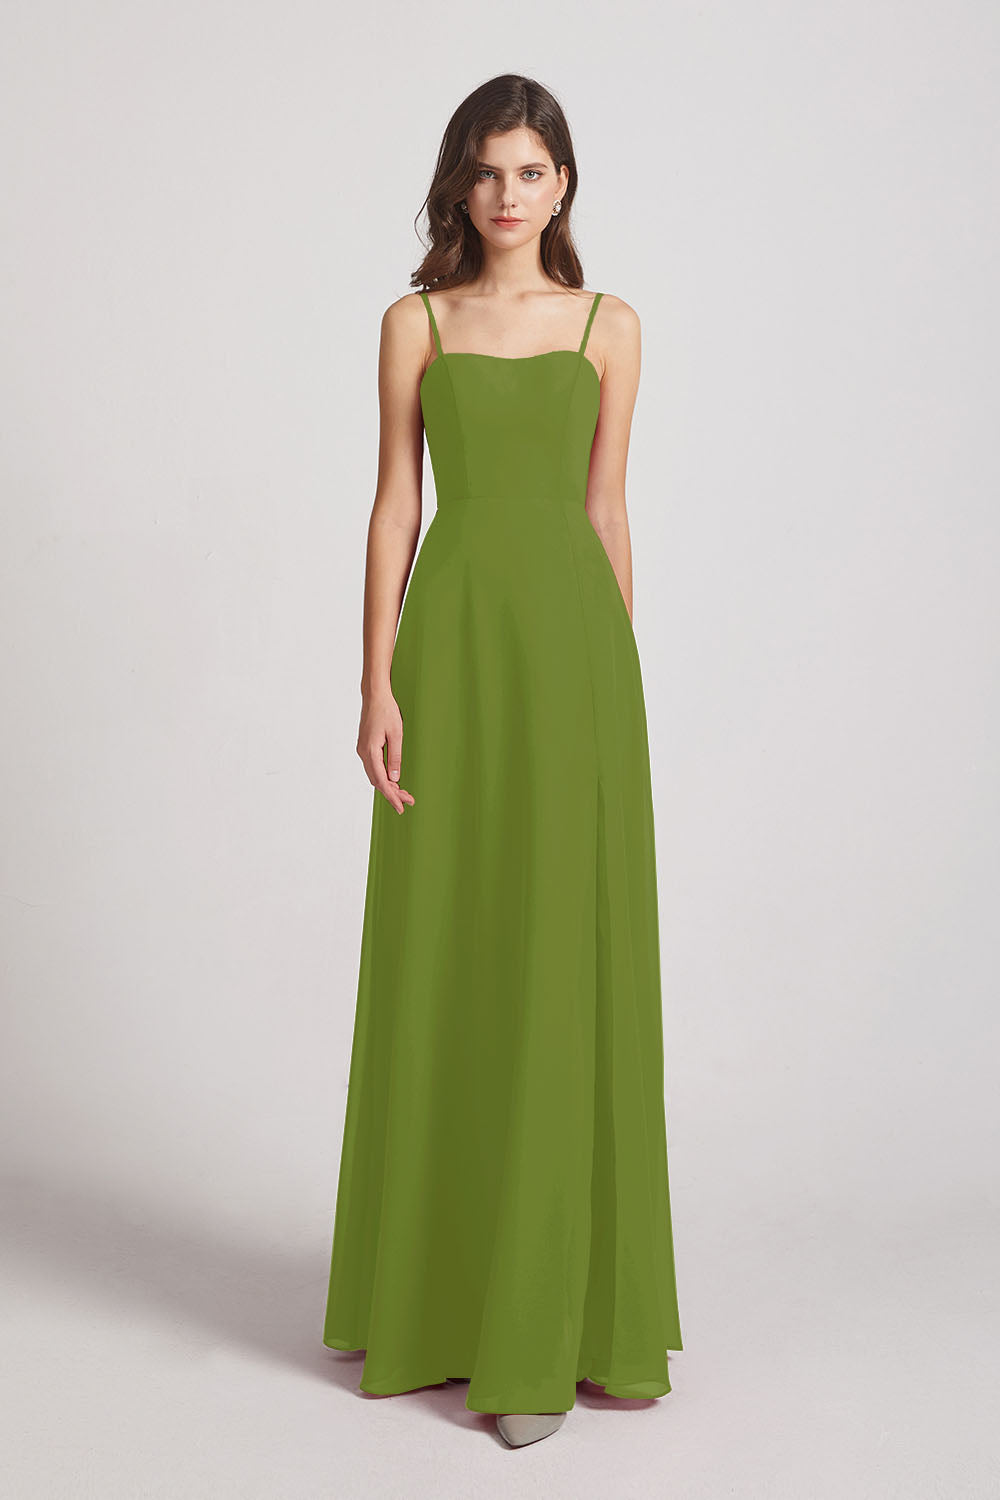 Alfa Bridal Olive Green Spaghetti Straps Long Chiffon Bridesmaid Dresses with Side Slit (AF0112)